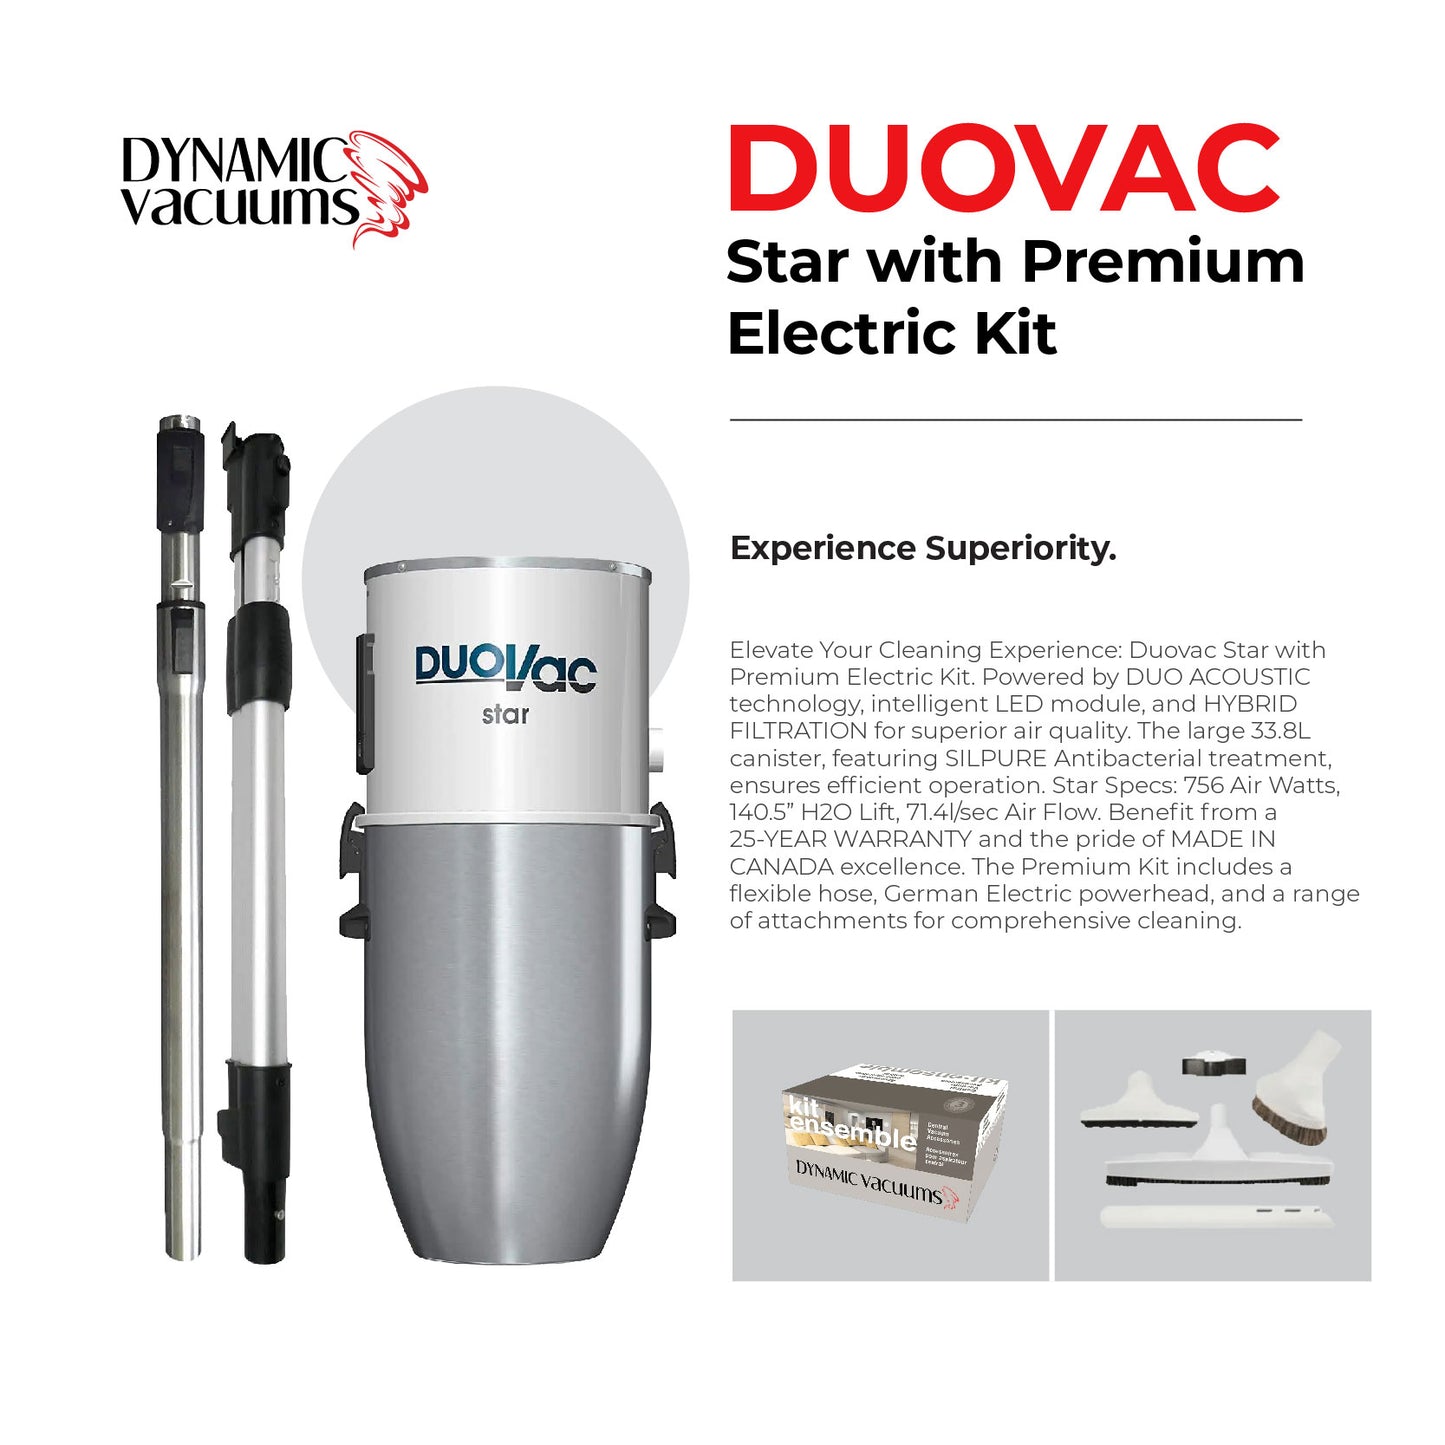 Duovac Star with Premium Electric Kit